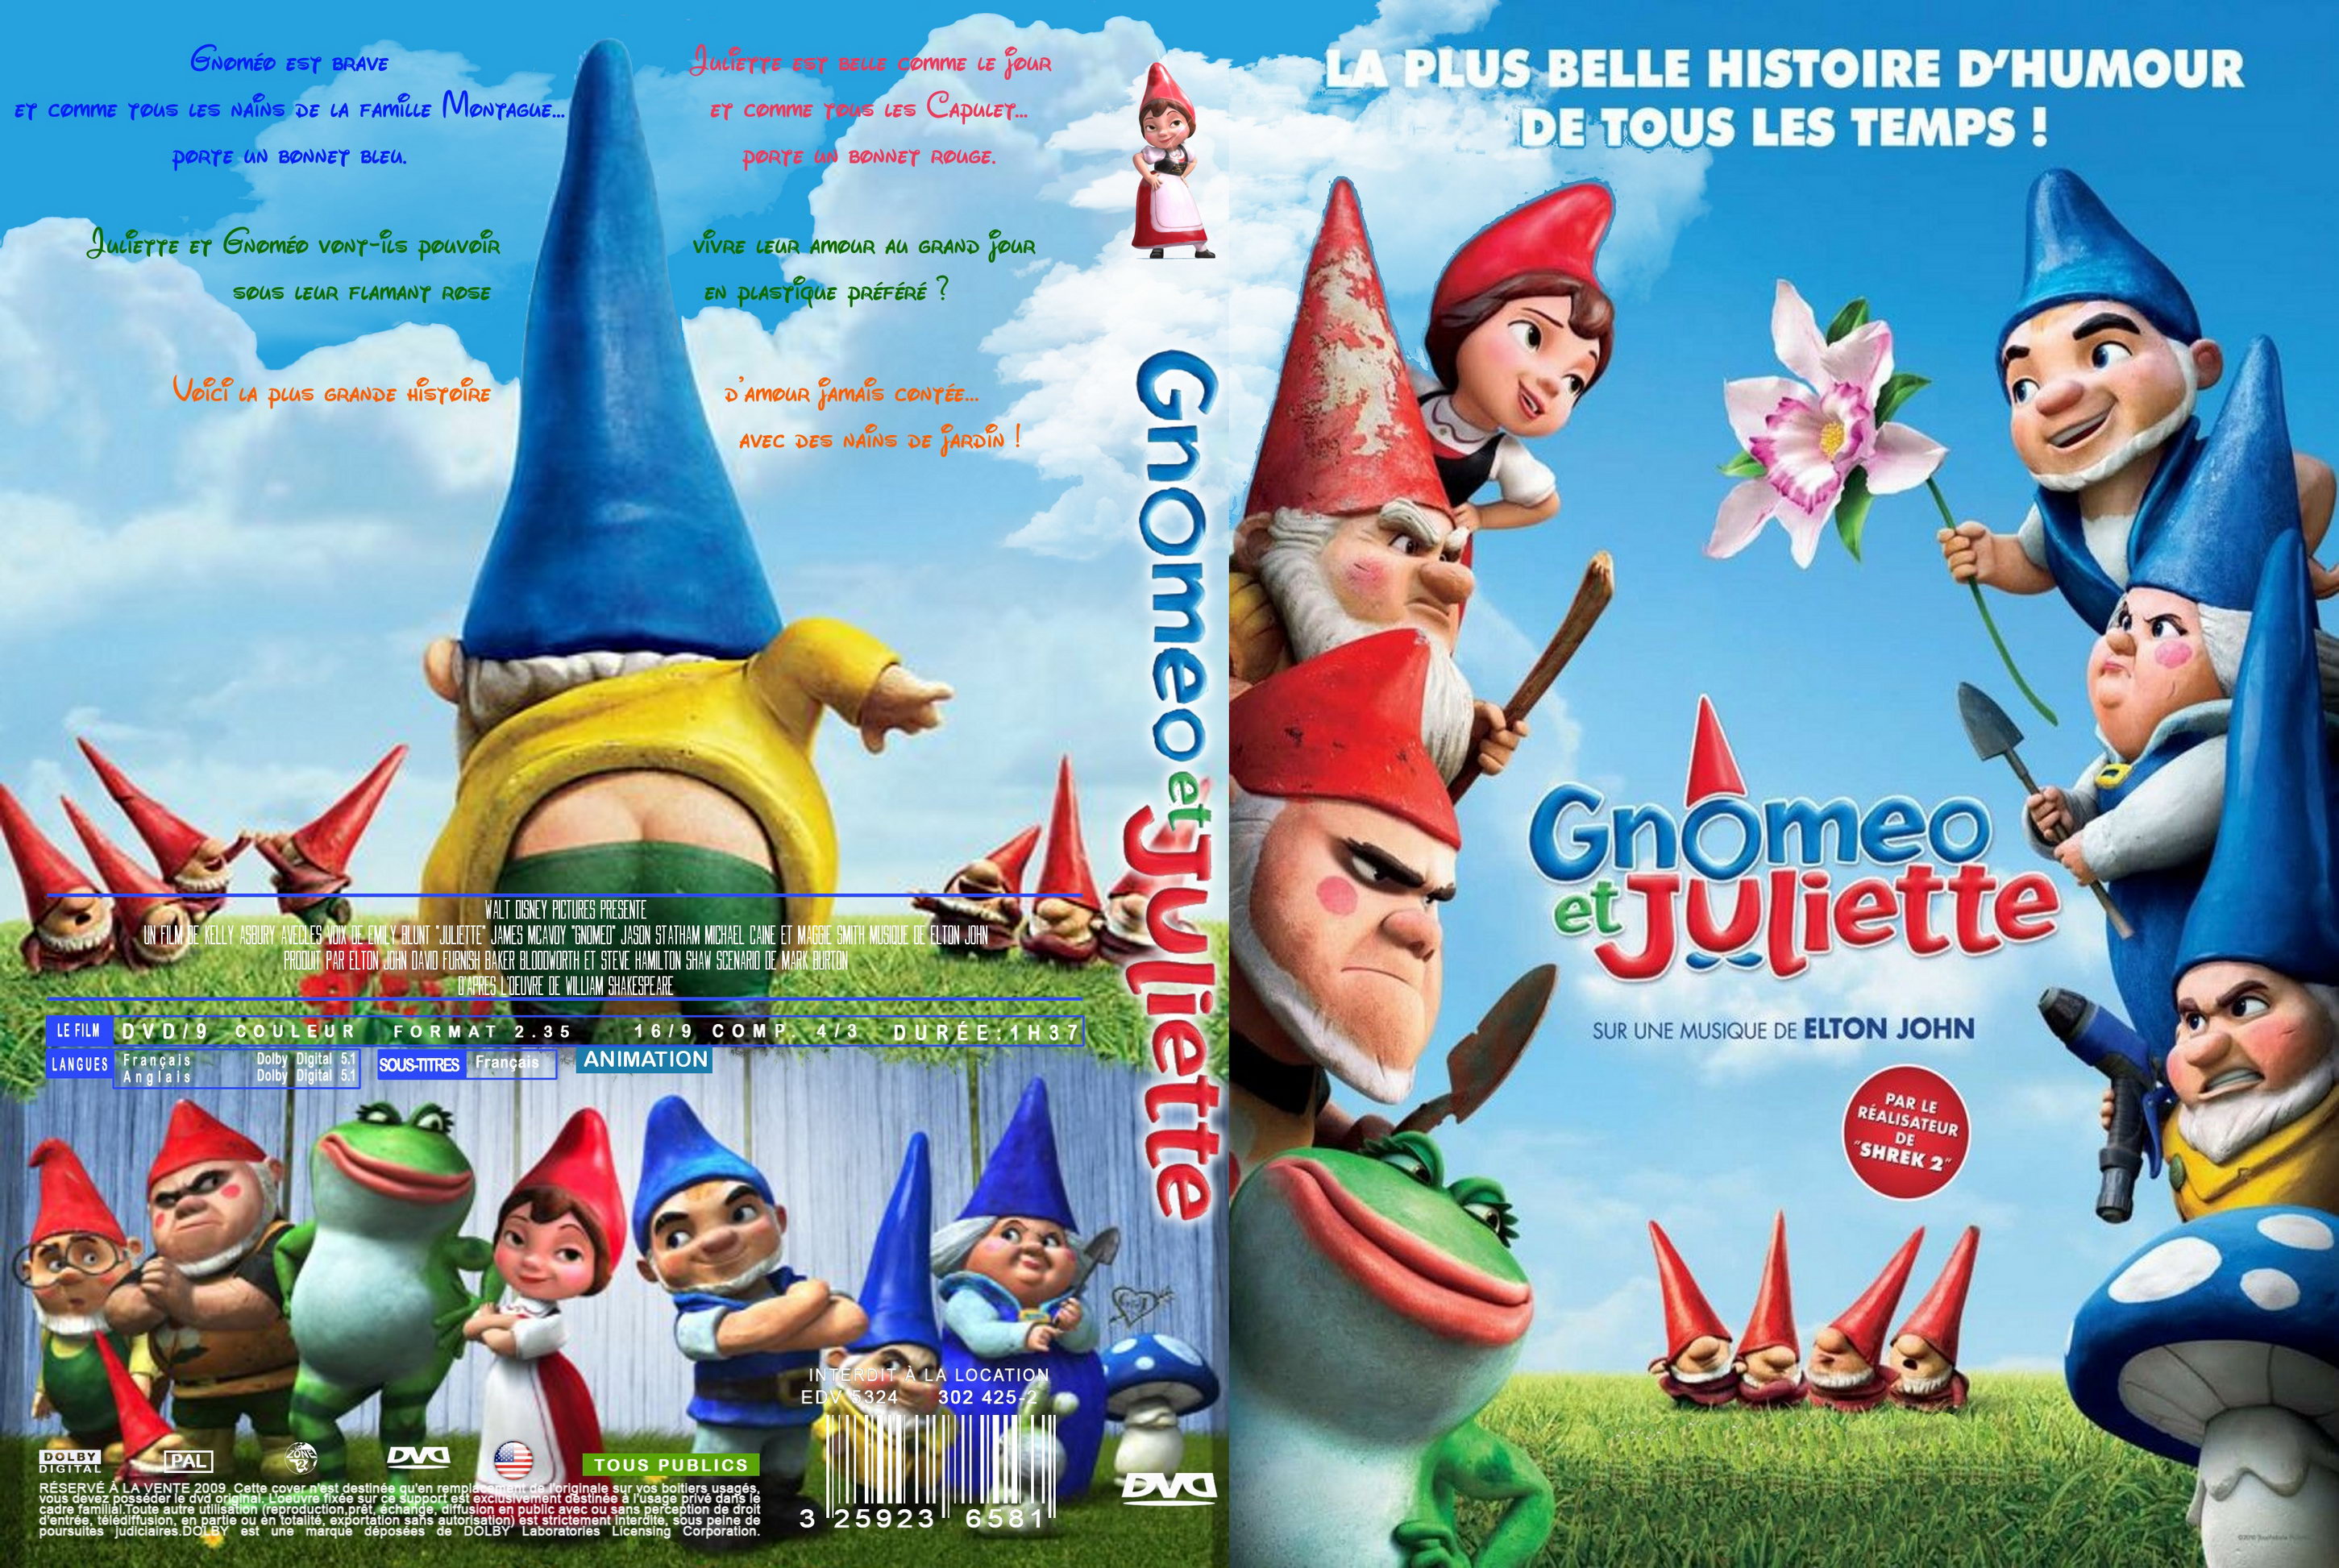 Jaquette DVD Gnomeo et Juliette custom